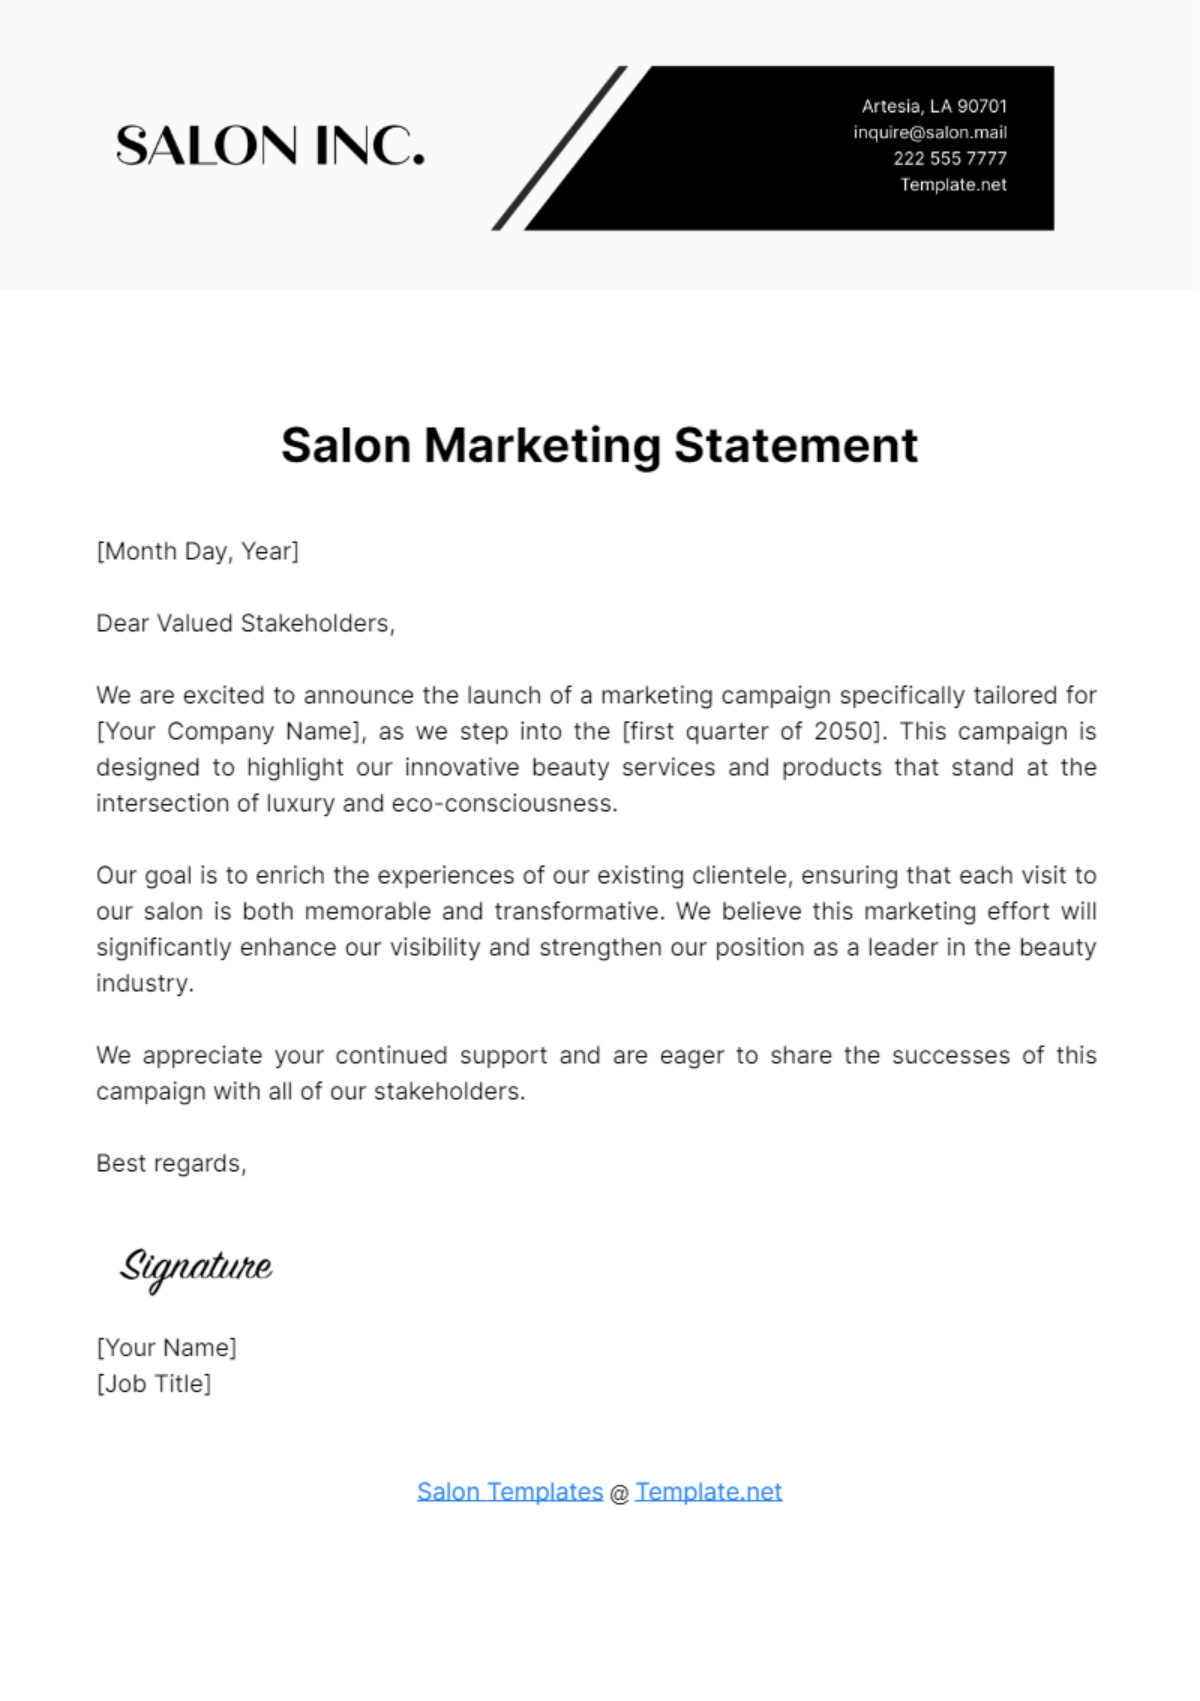 Salon Marketing Statement Template